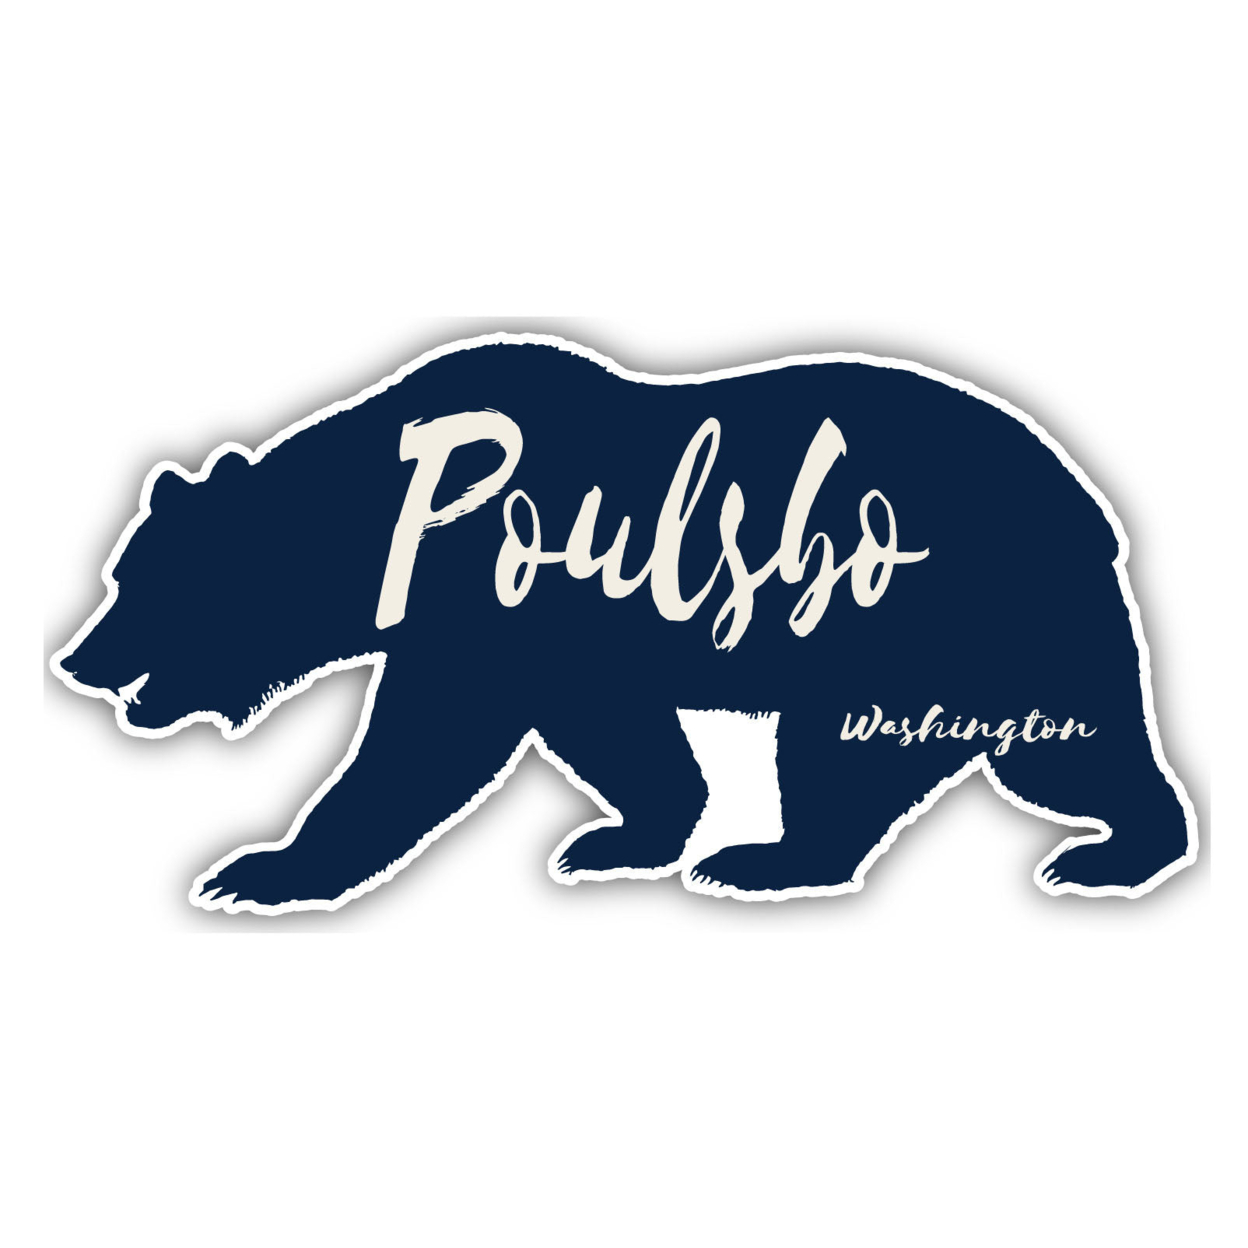 Poulsbo Washington Souvenir Decorative Stickers (Choose Theme And Size) - Single Unit, 4-Inch, Bear